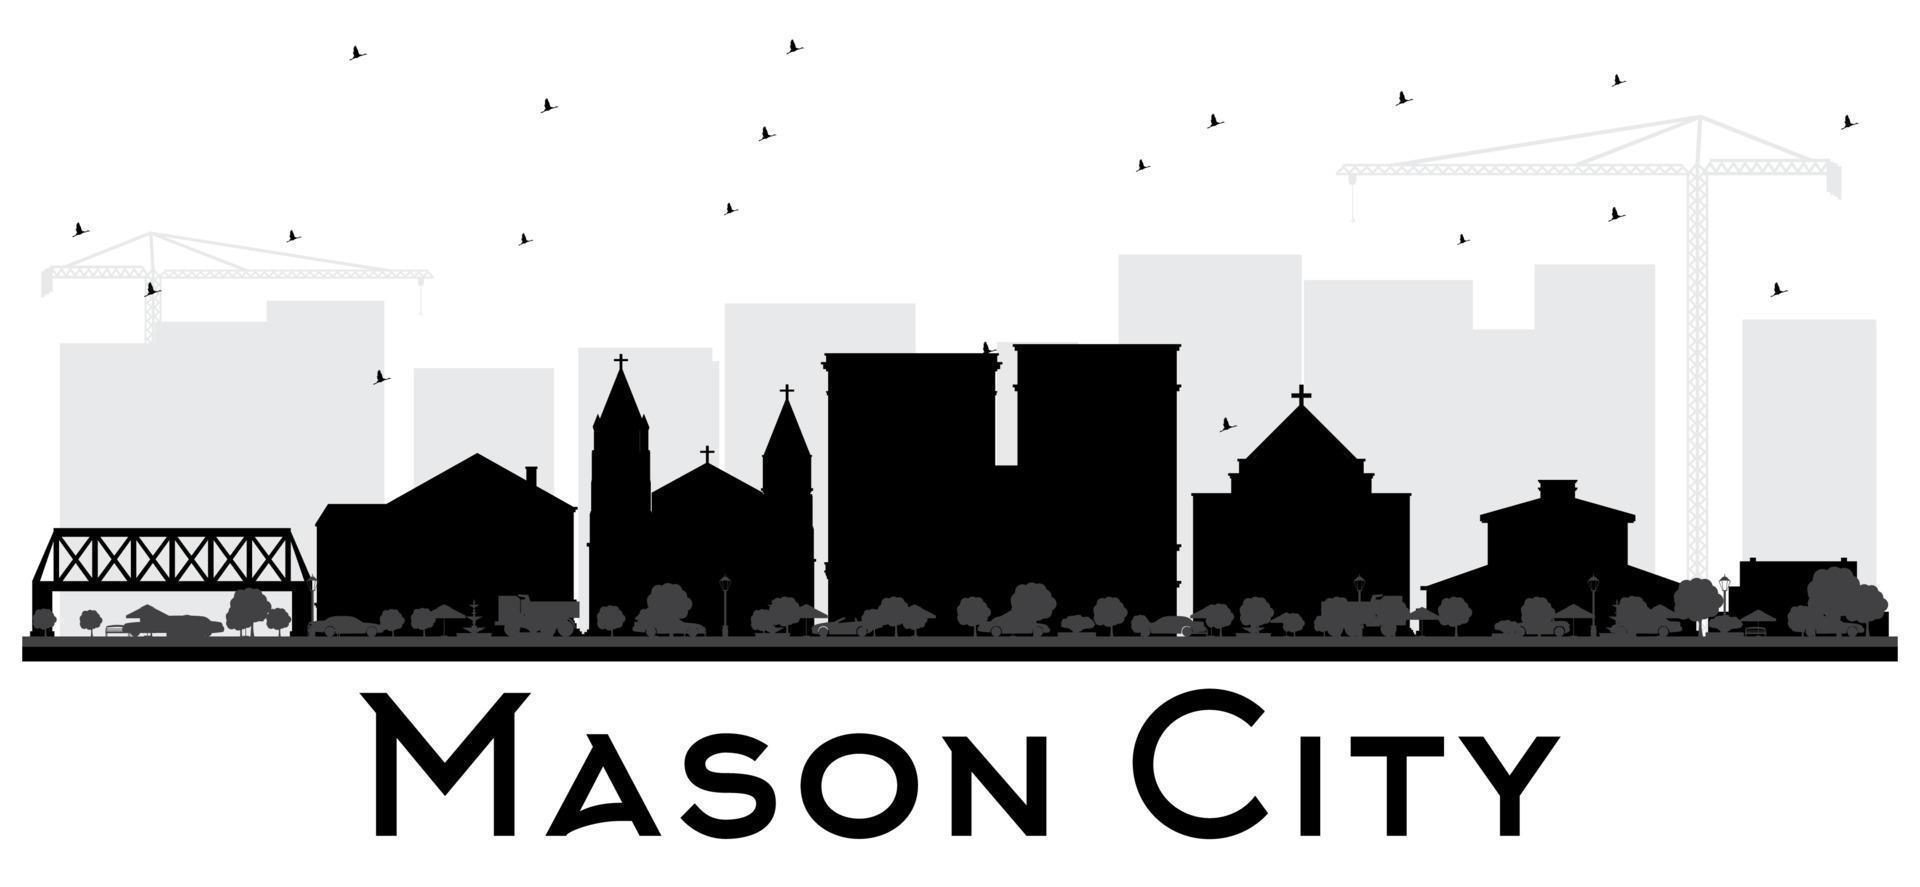 Mason City Iowa skyline black and white silhouette. vector